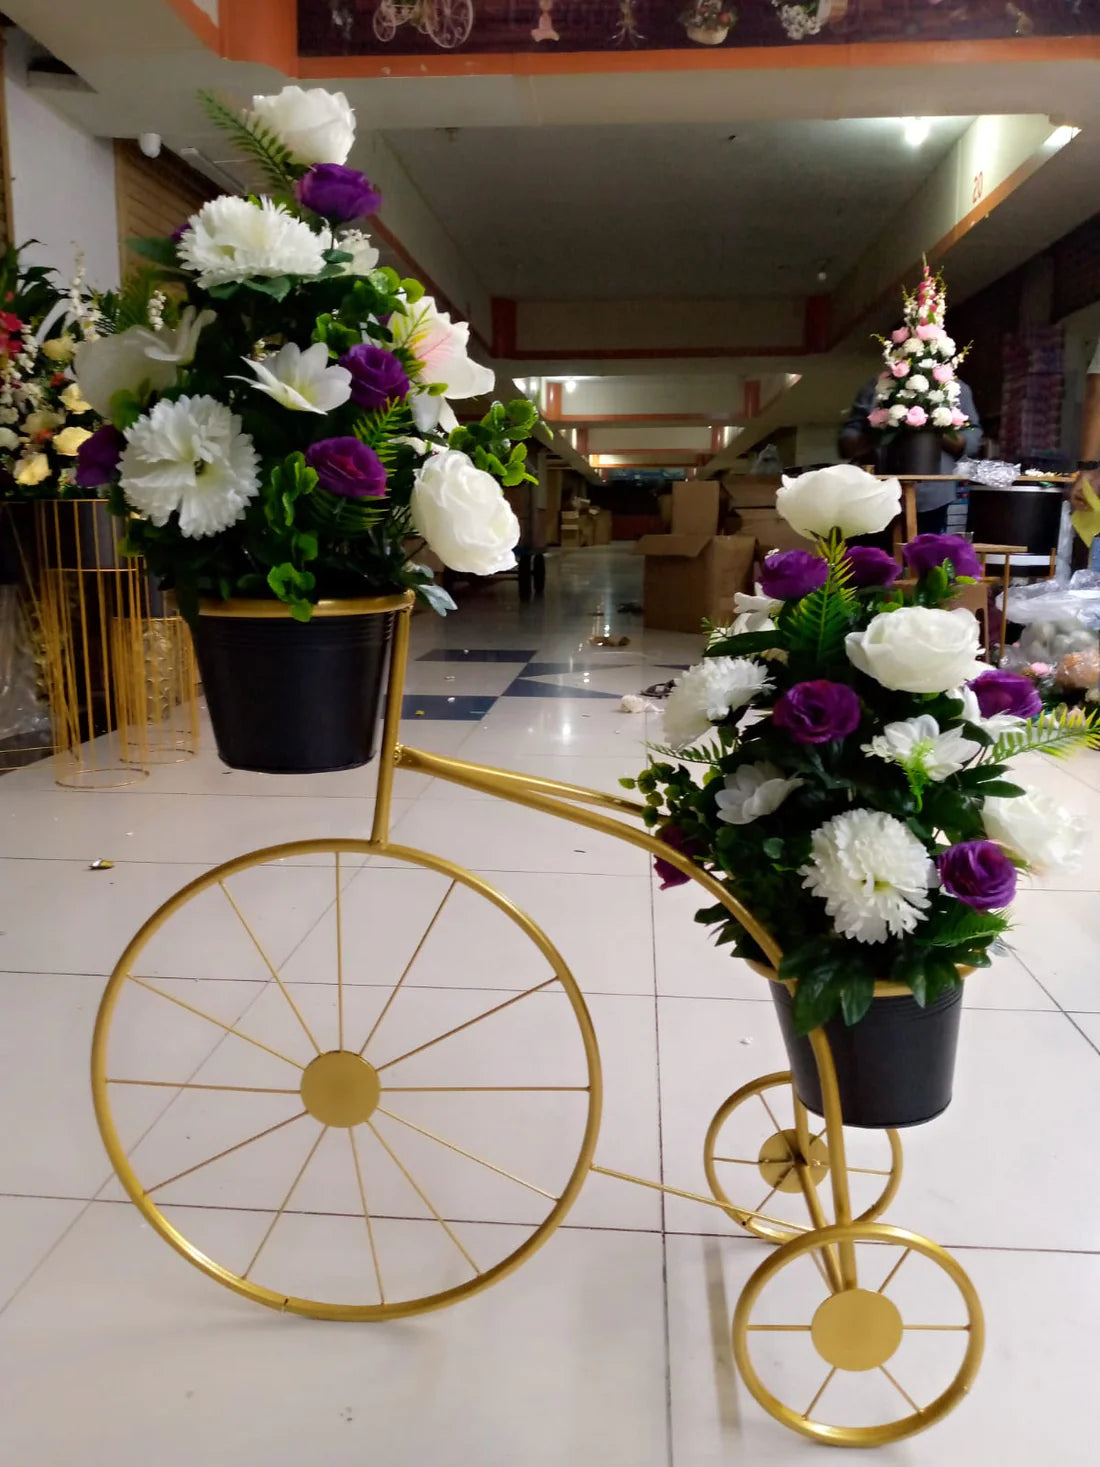 Floor Cycle Stand Pot with Flower Arrangement